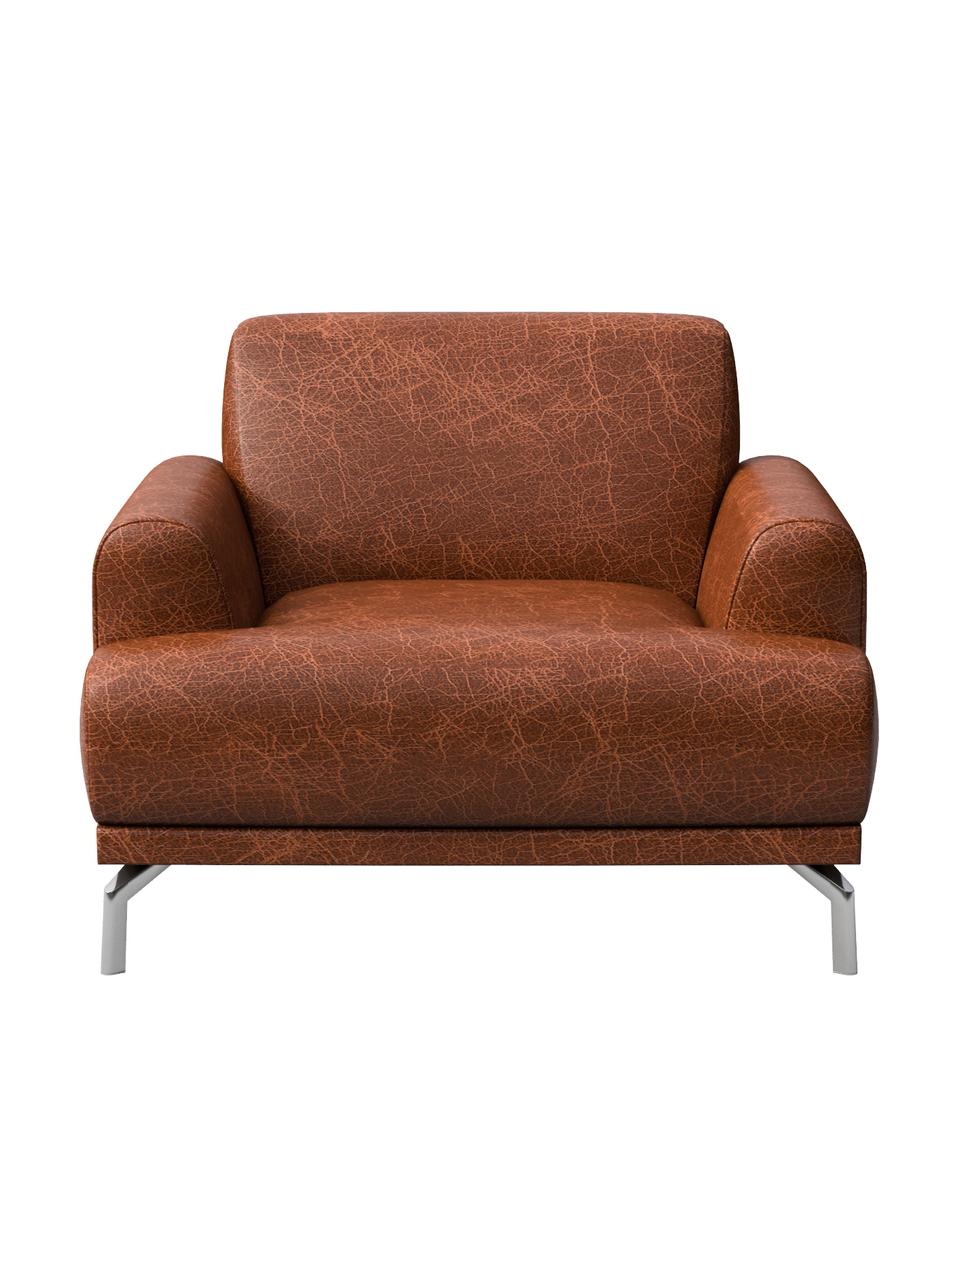 Fotel ze skóry Puzo, Tapicerka: 100% skóra, Nogi: metal, Koniakowy, S 95 x G 84 cm